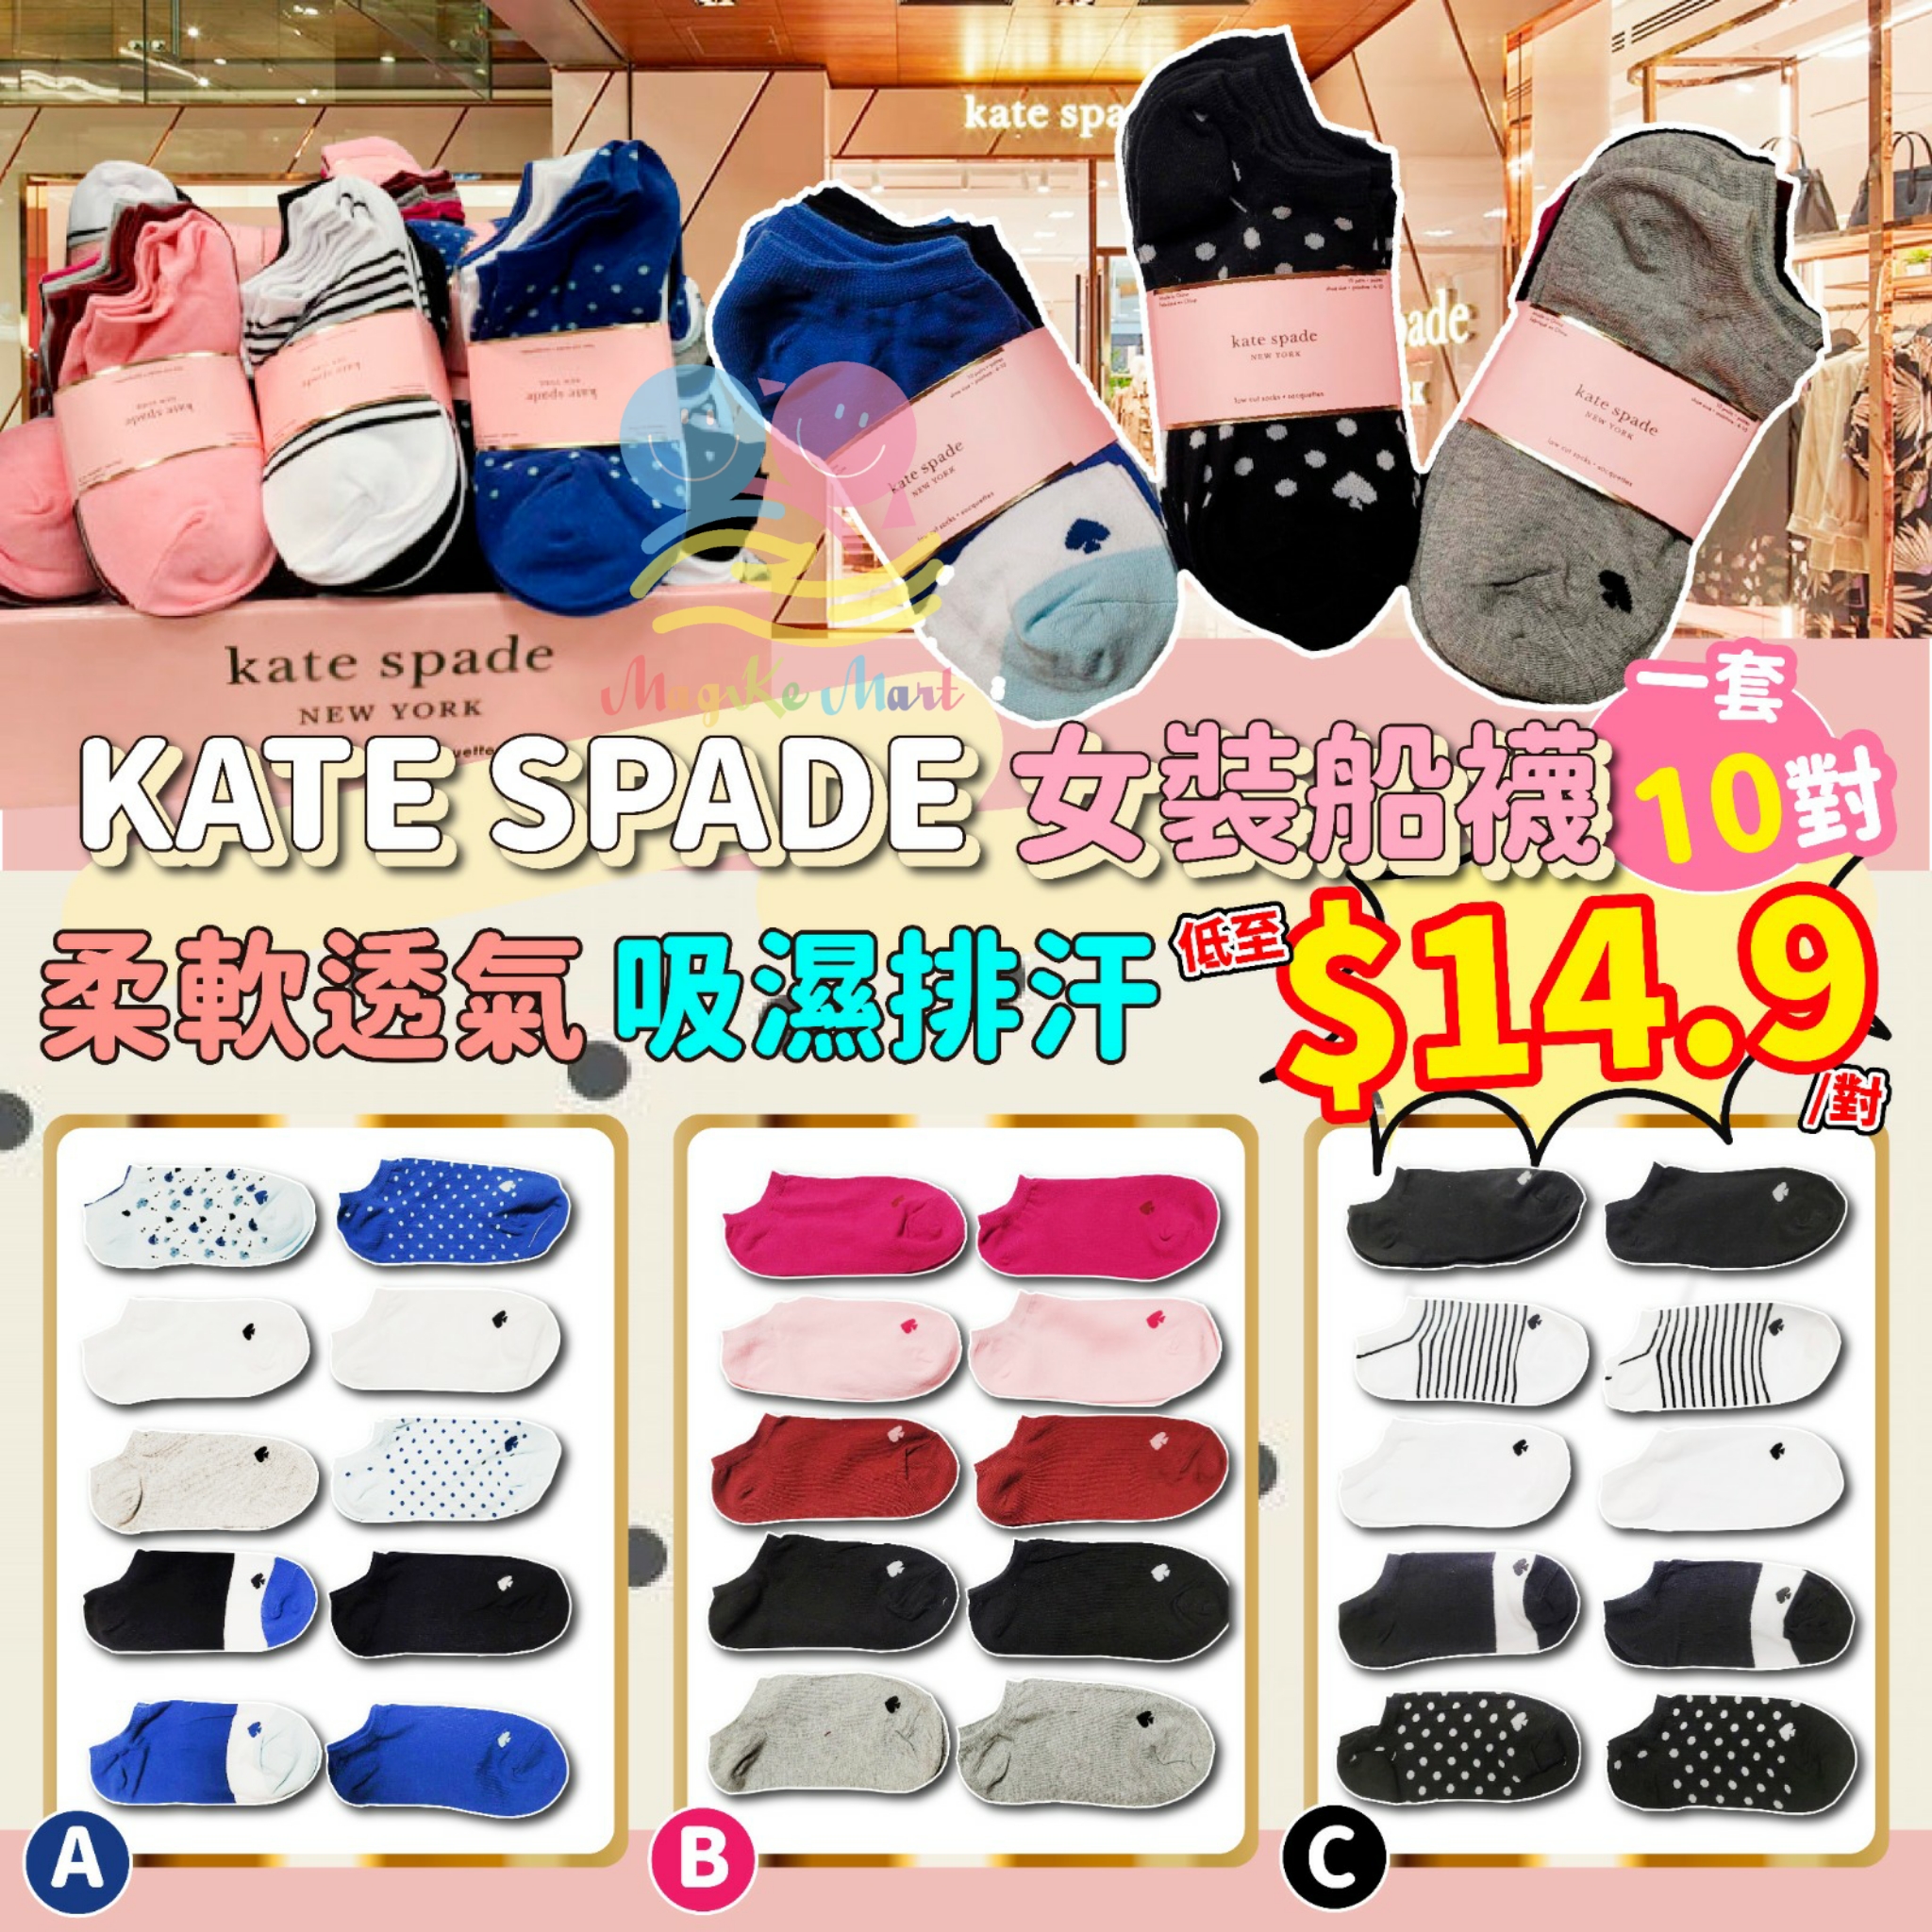 KATE SPADE 女裝船襪 (1套10對) (A) 藍色組合 (顏色及款式隨機)